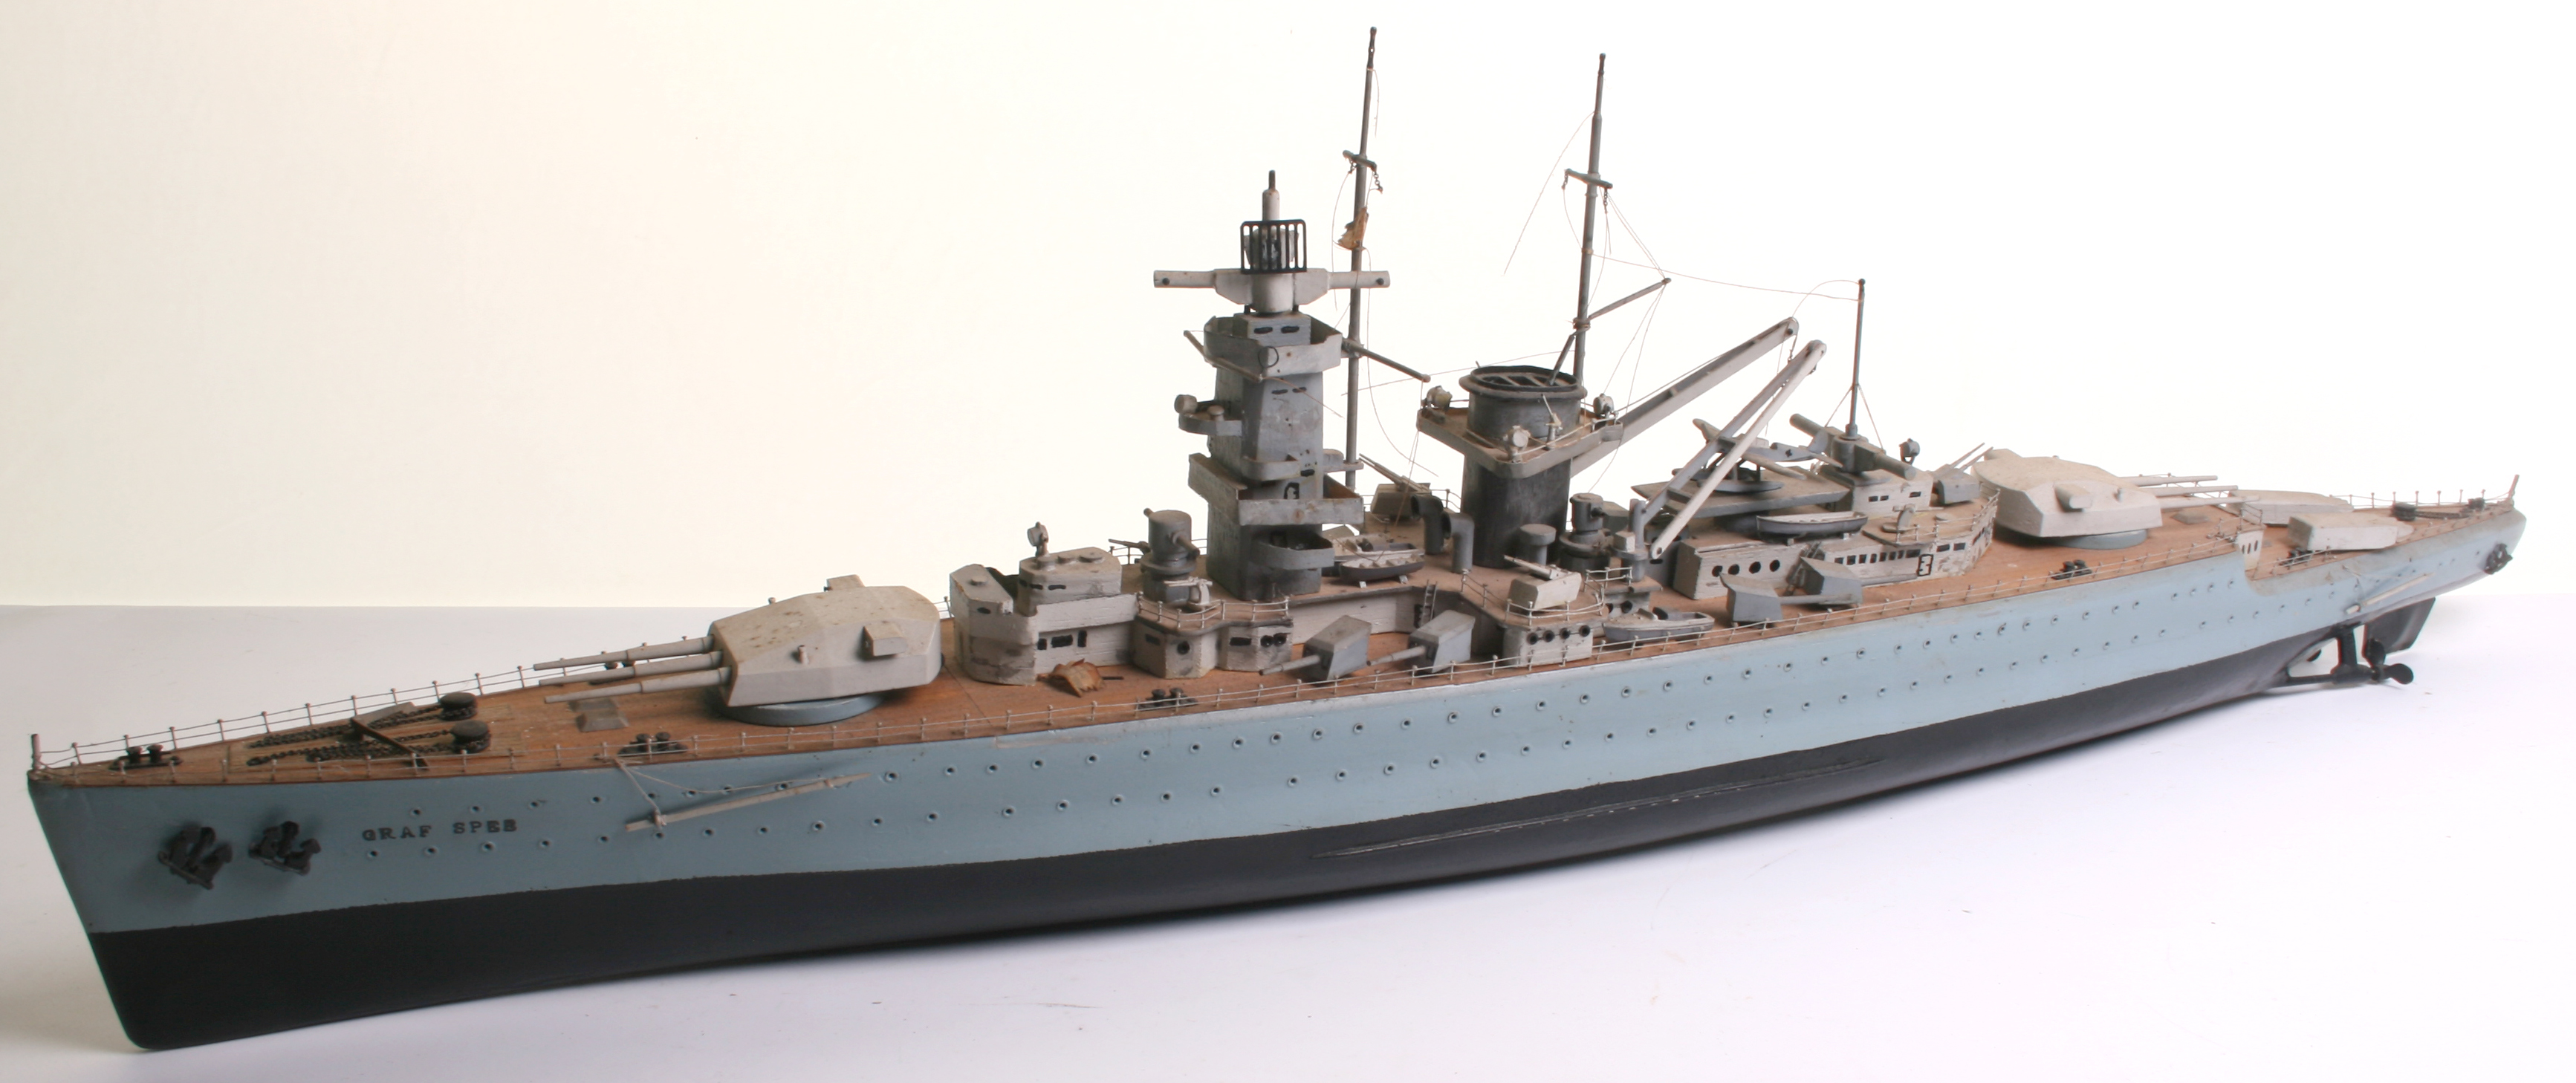 A wooden model of a German Deutschland-class heavy cruiser ‘Admiral Graf Spree’ Battleship, - Image 6 of 8